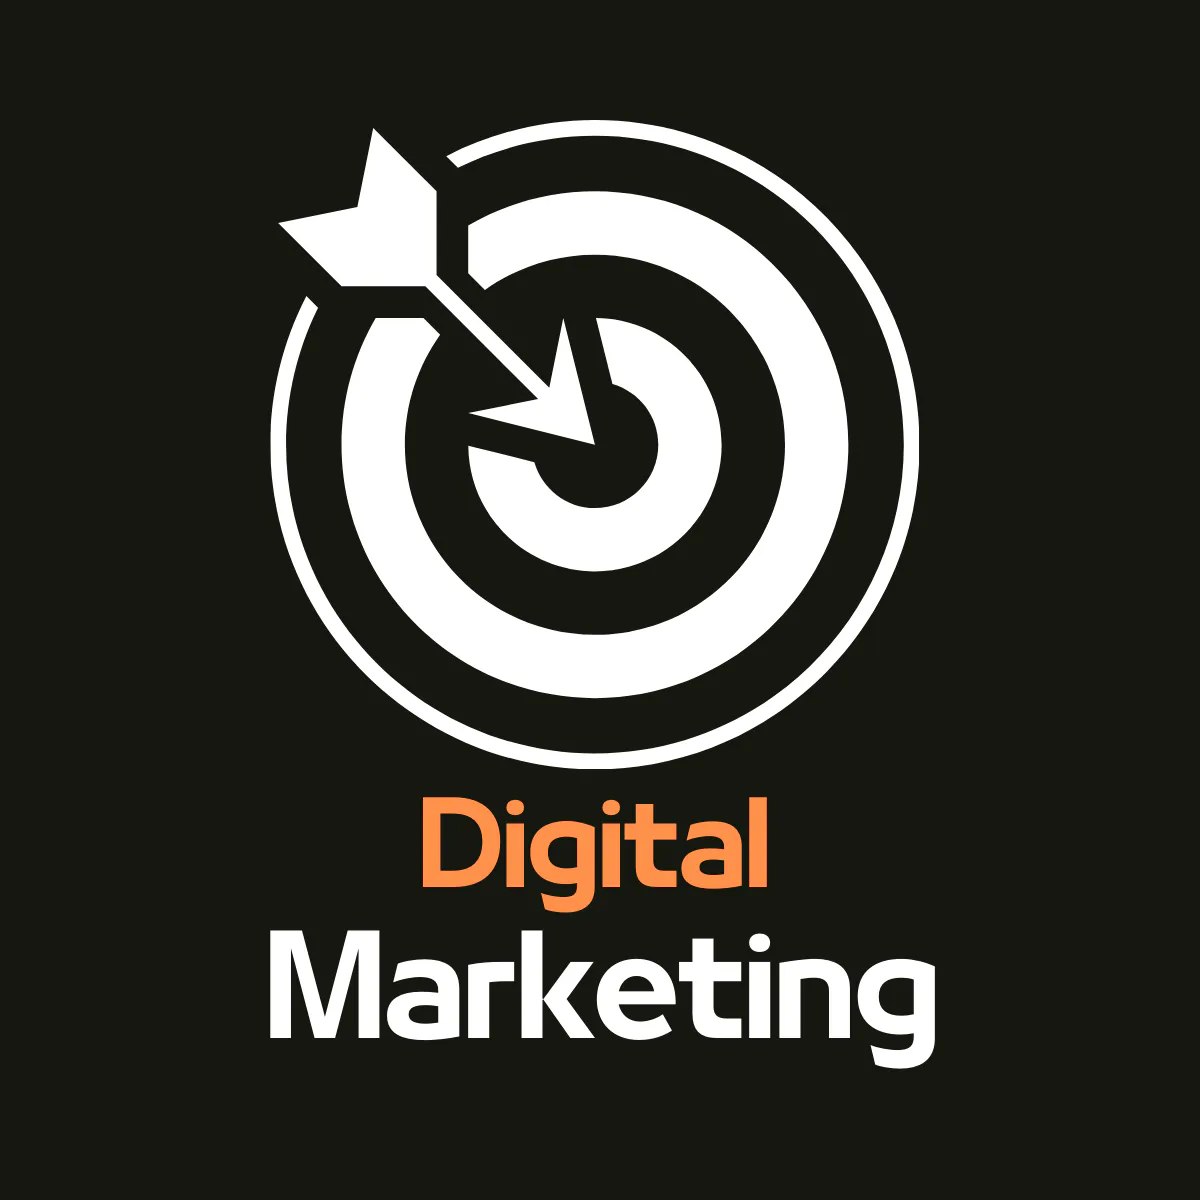 Digital Marketing and Advertising Company